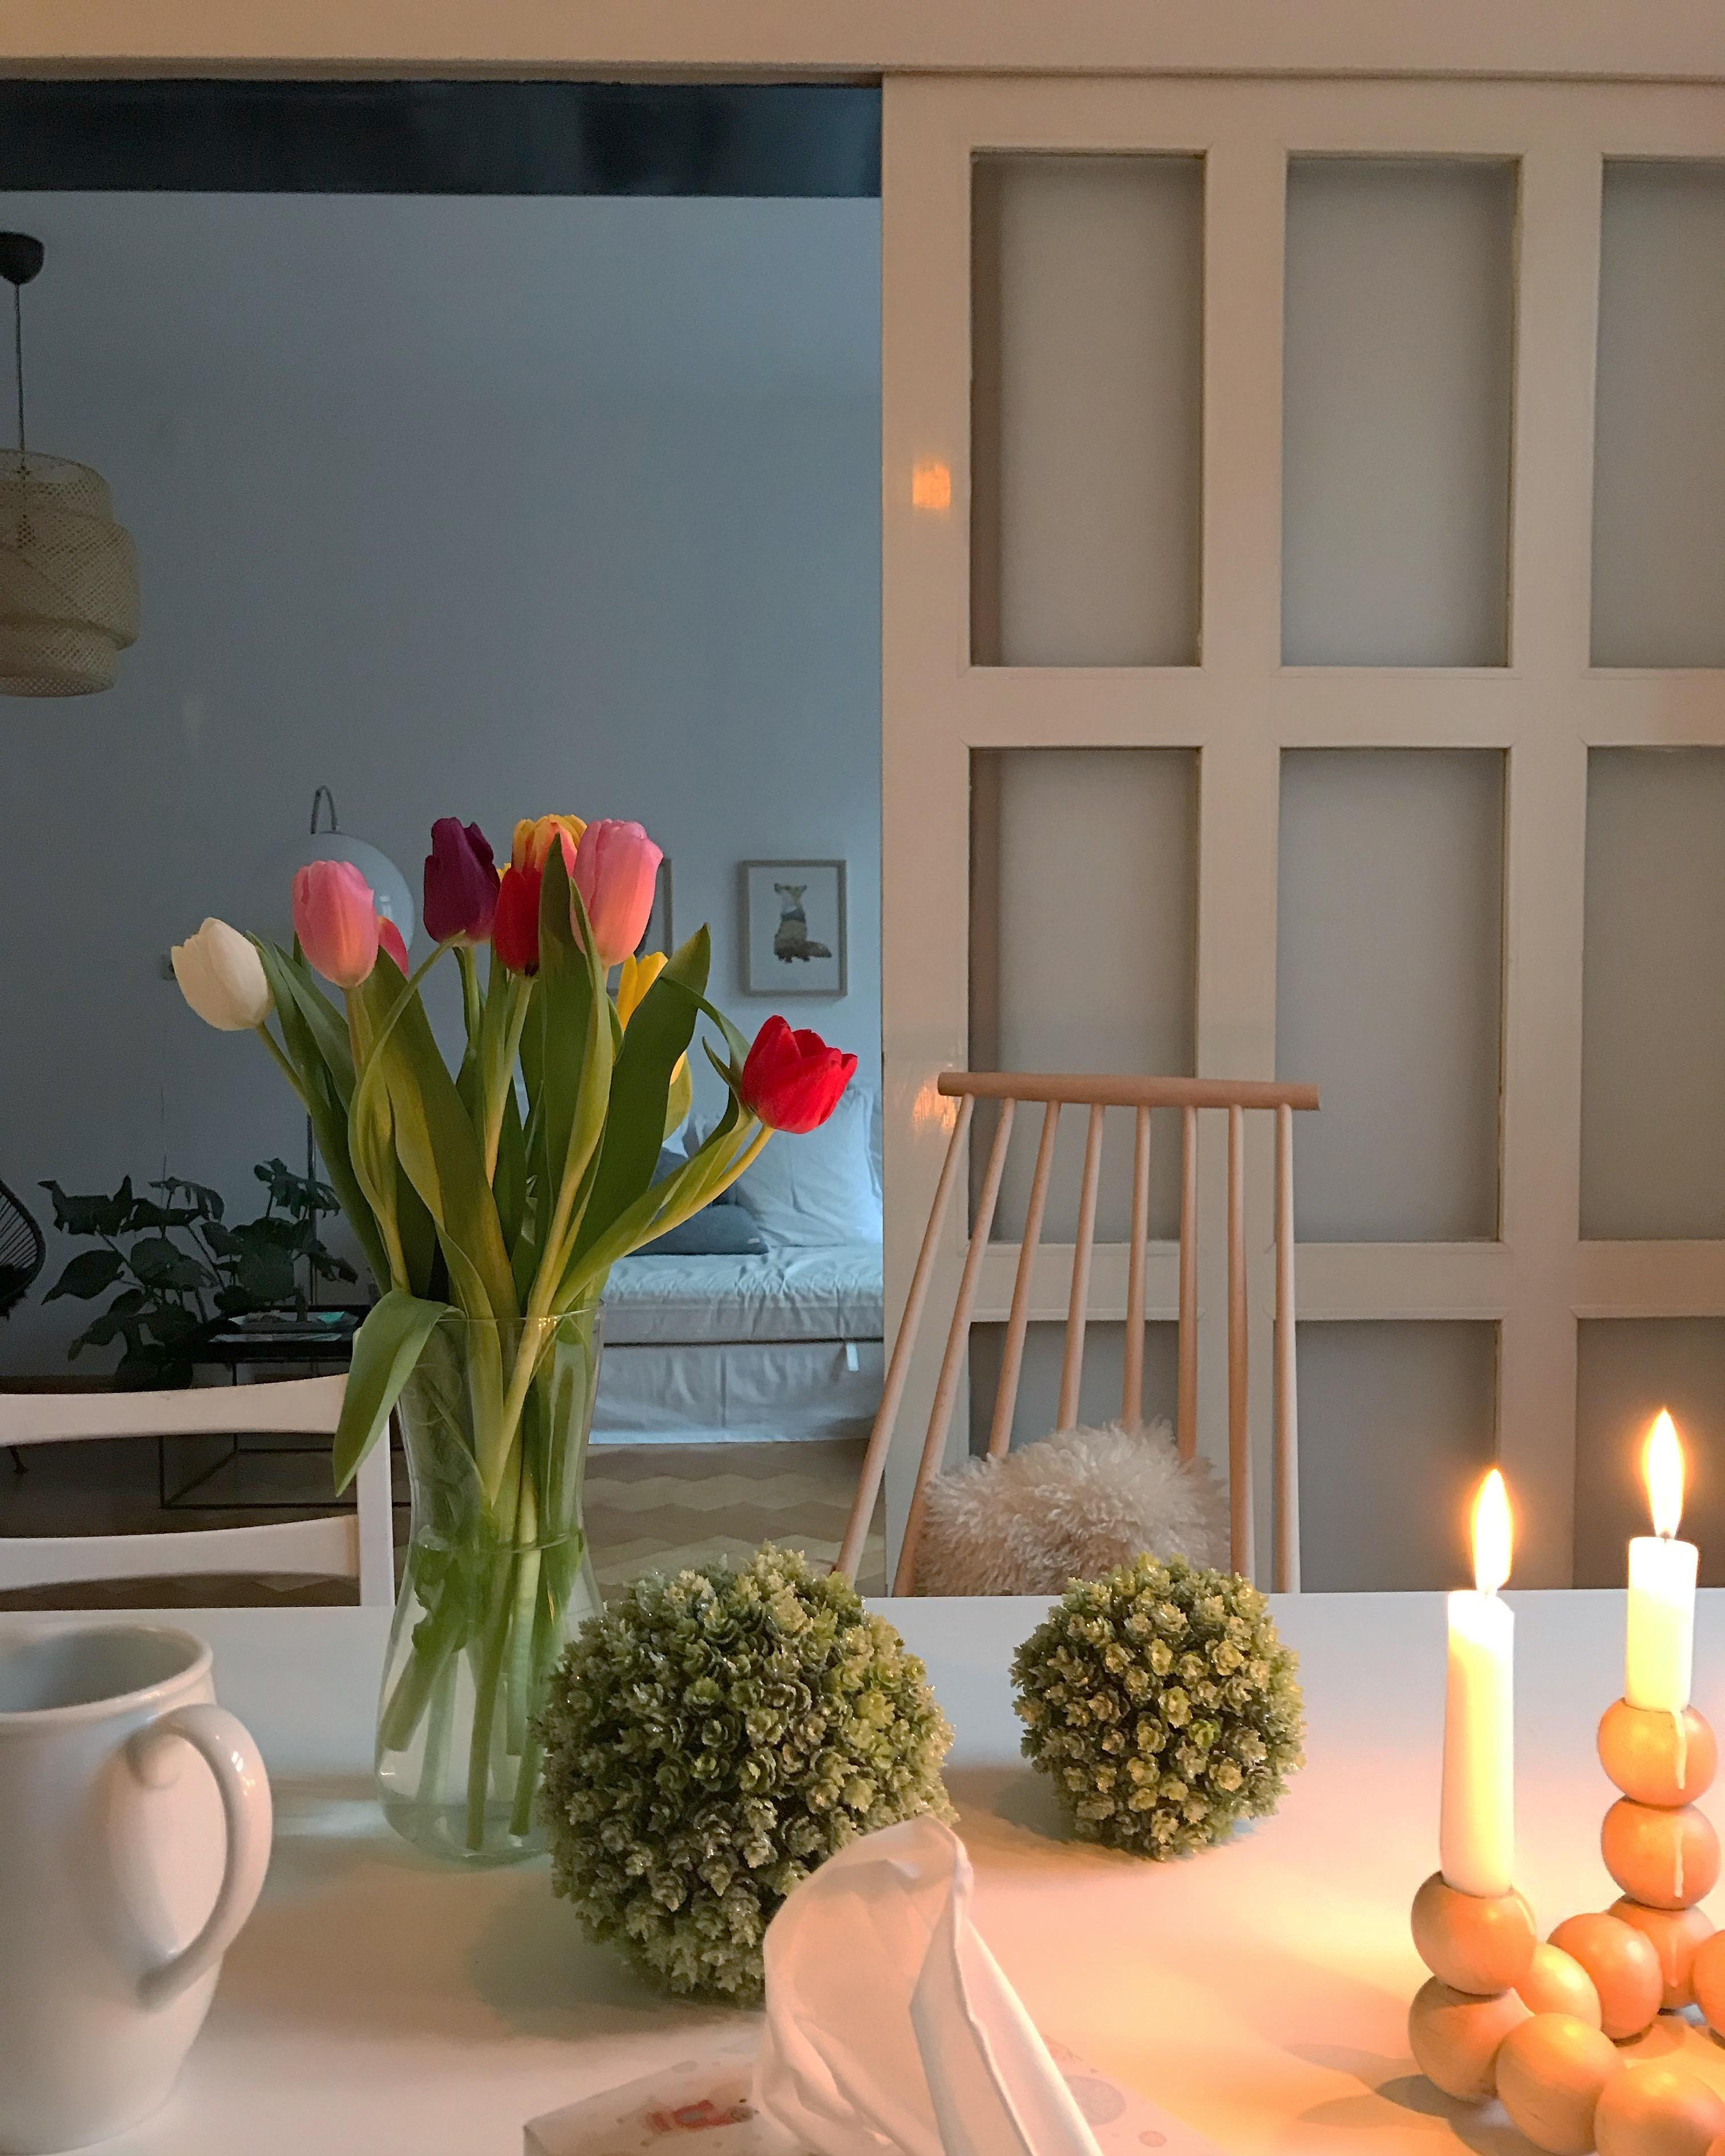 MorningLight

#sundays #frühstück #breakfast #candlelight #altbauliebe #schiebetür #tulpen #flowerpower